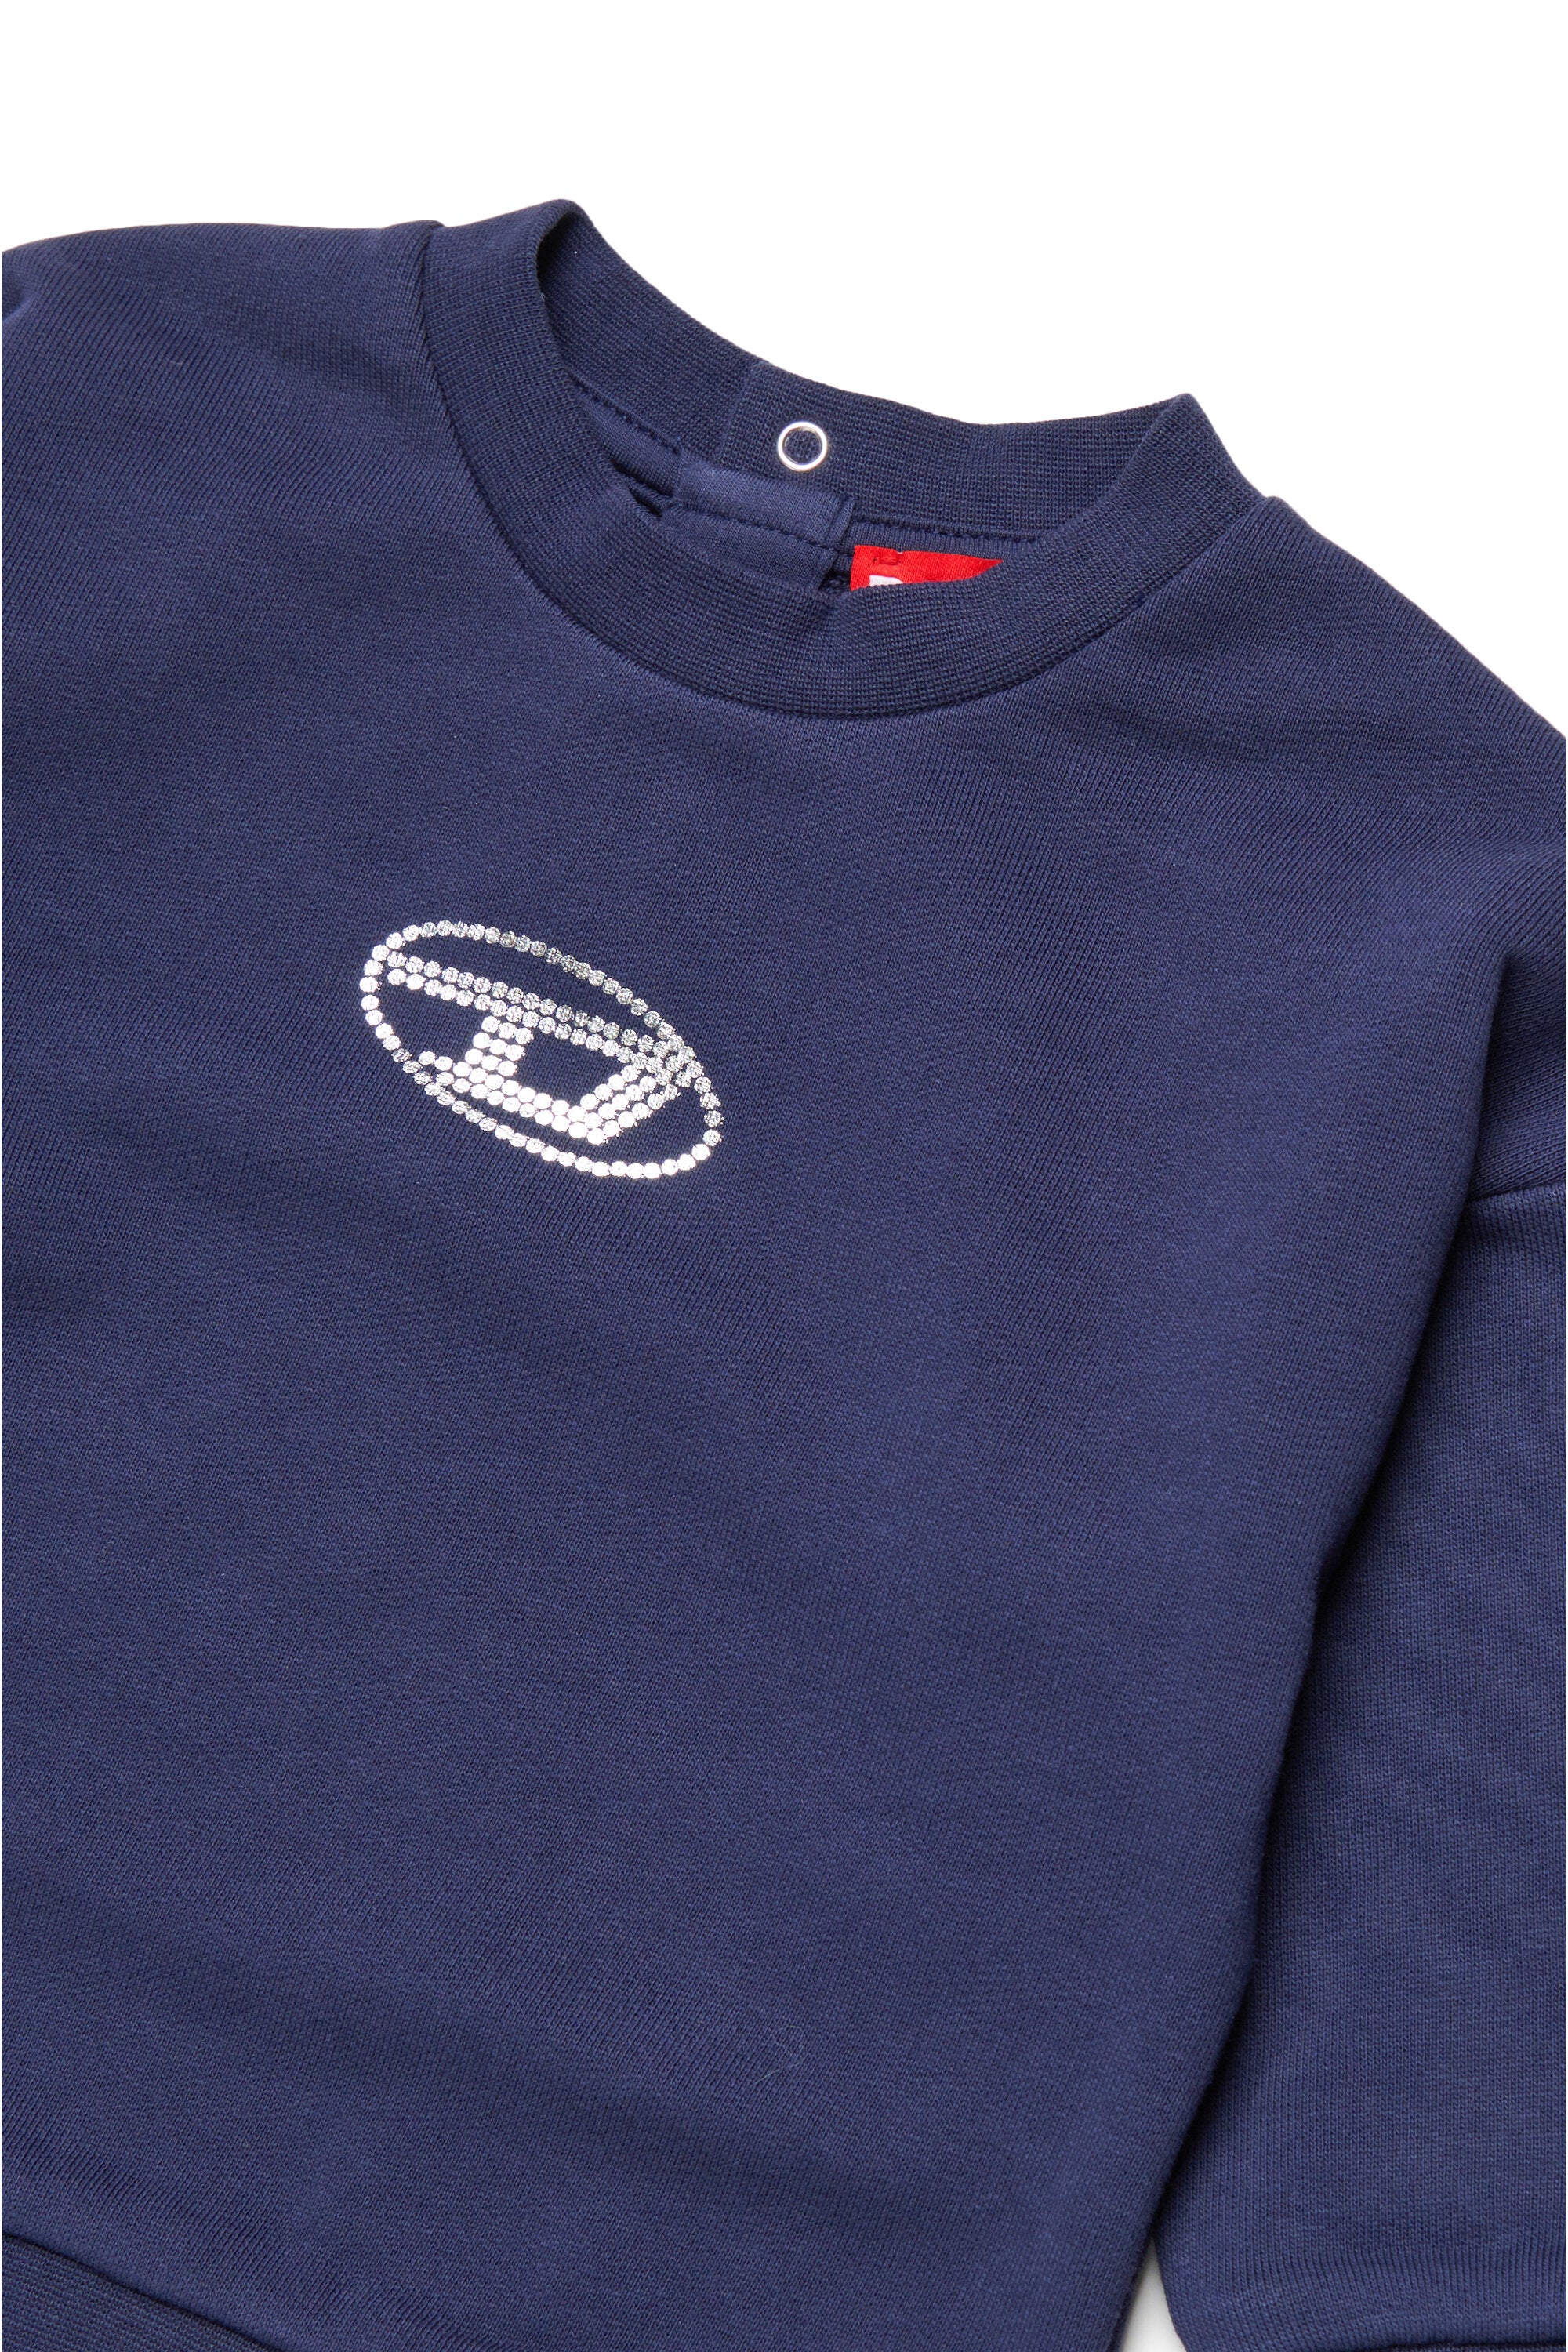 Crew-neck sweatshirt with oval D mylar logo